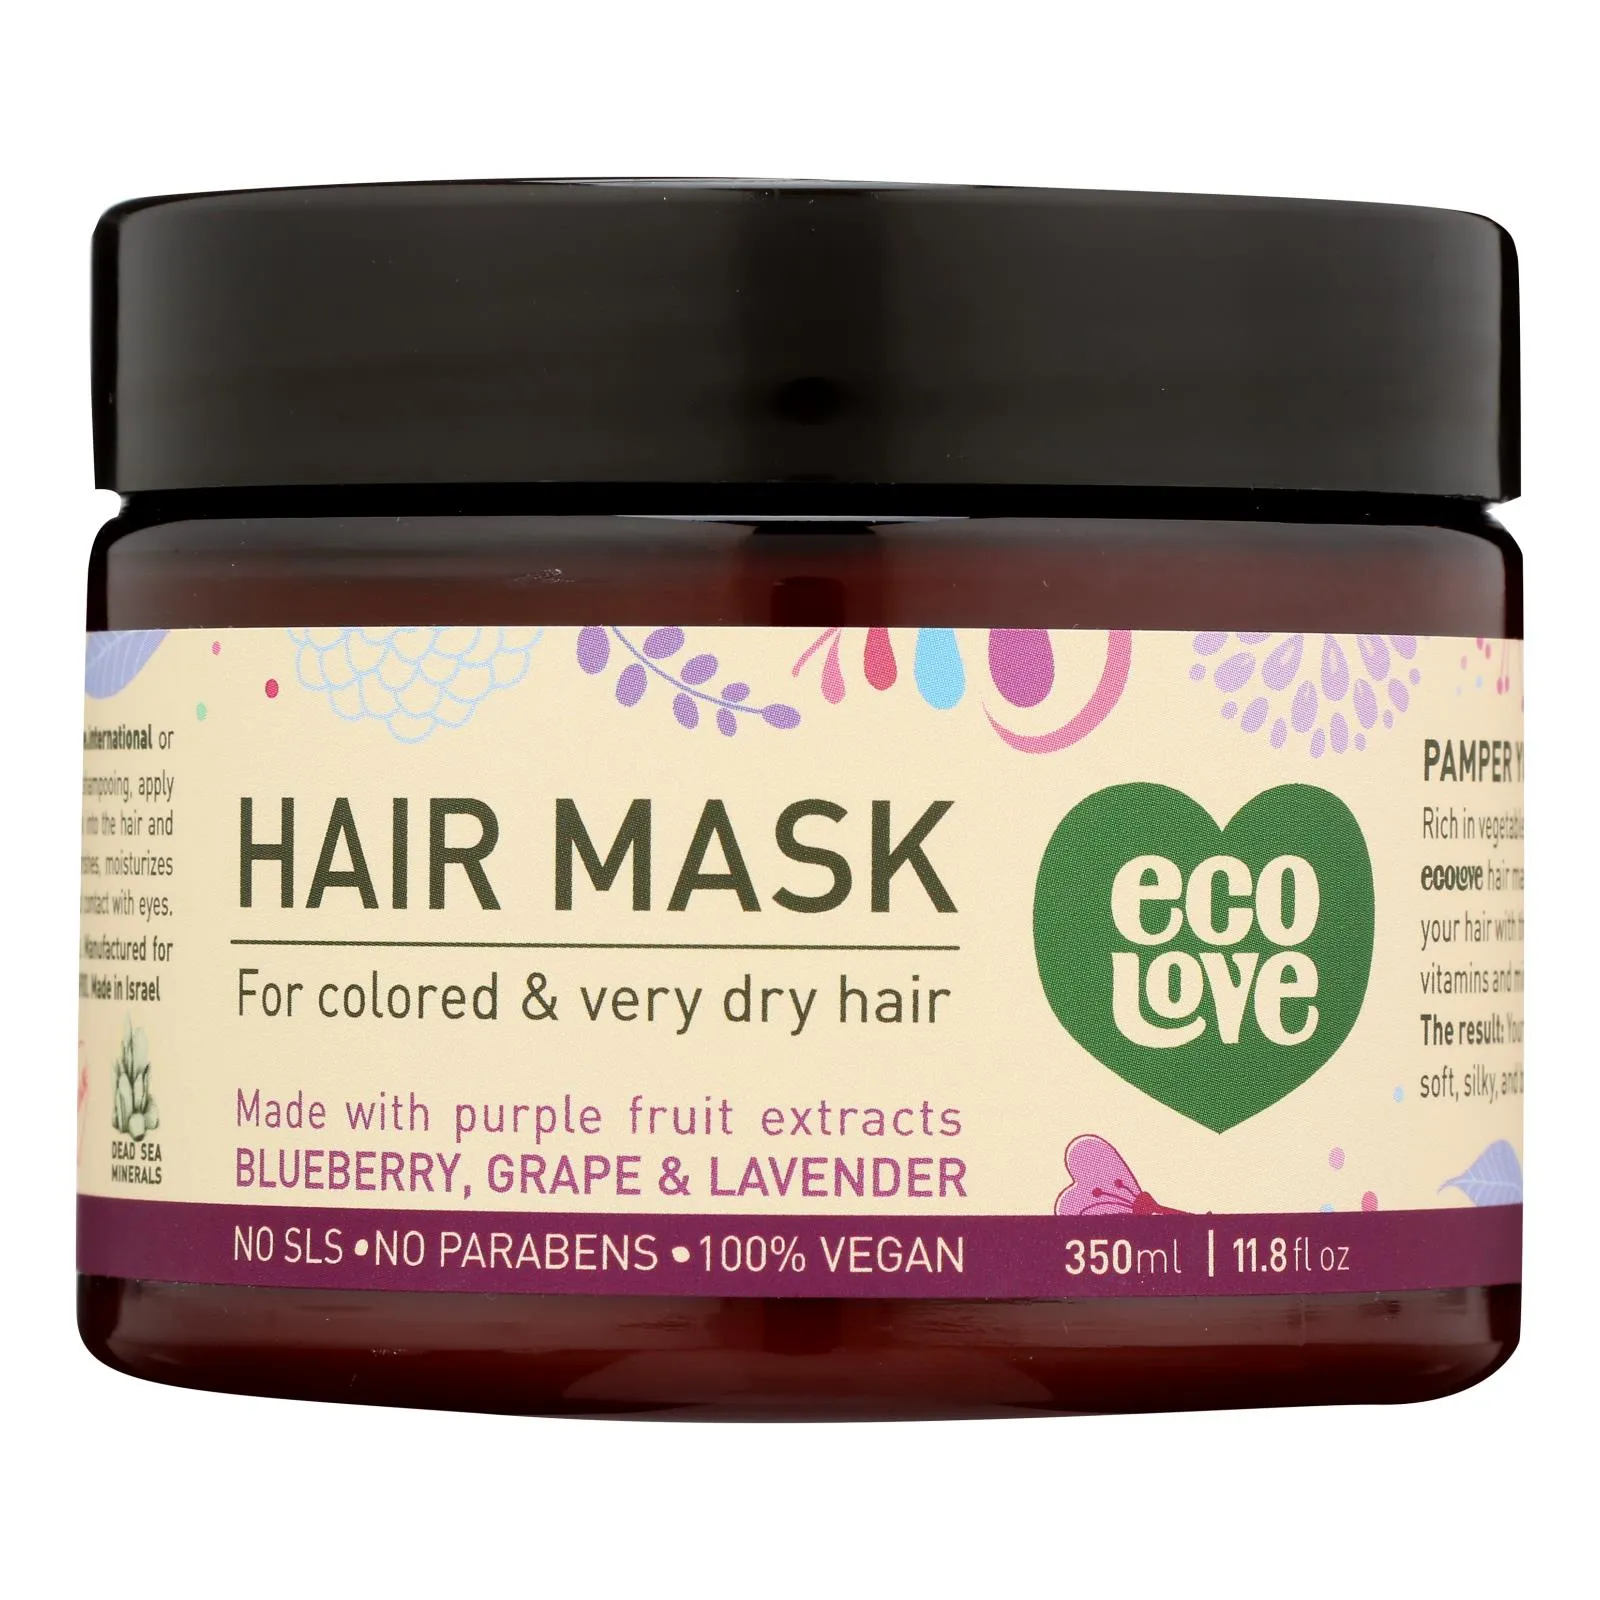 Ecolove hair mask